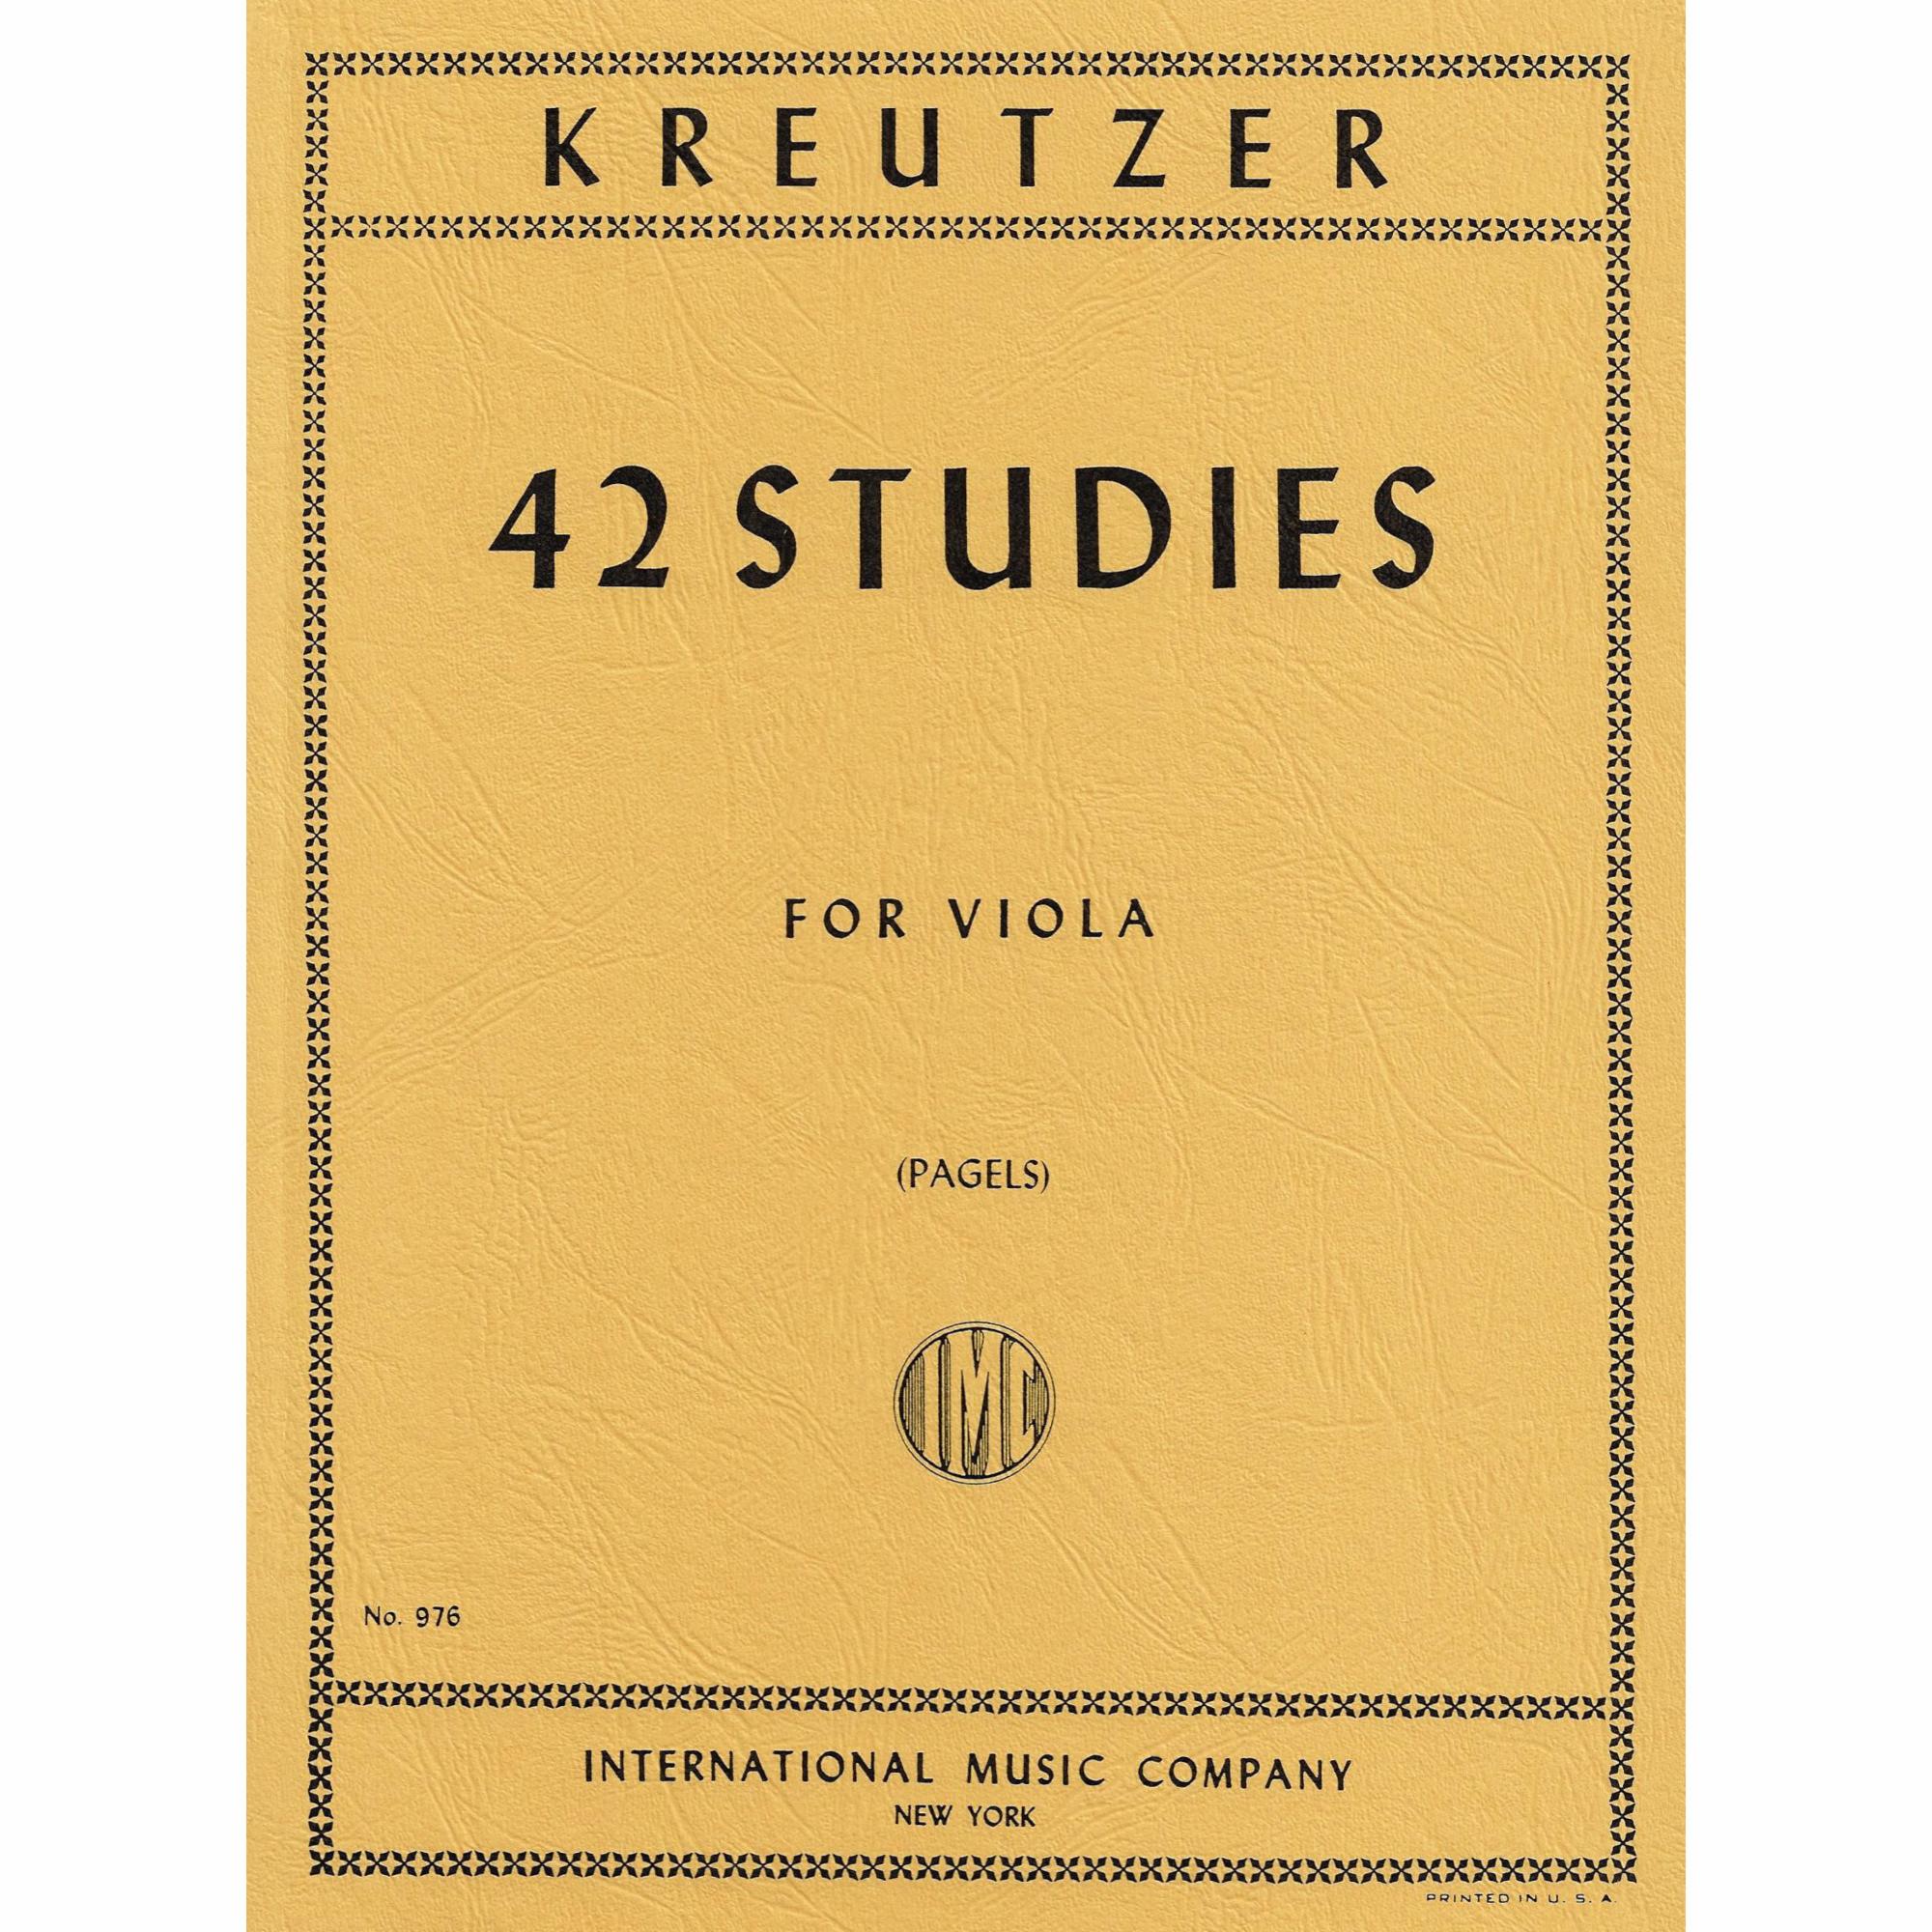 Kreutzer -- 42 Studies for Viola